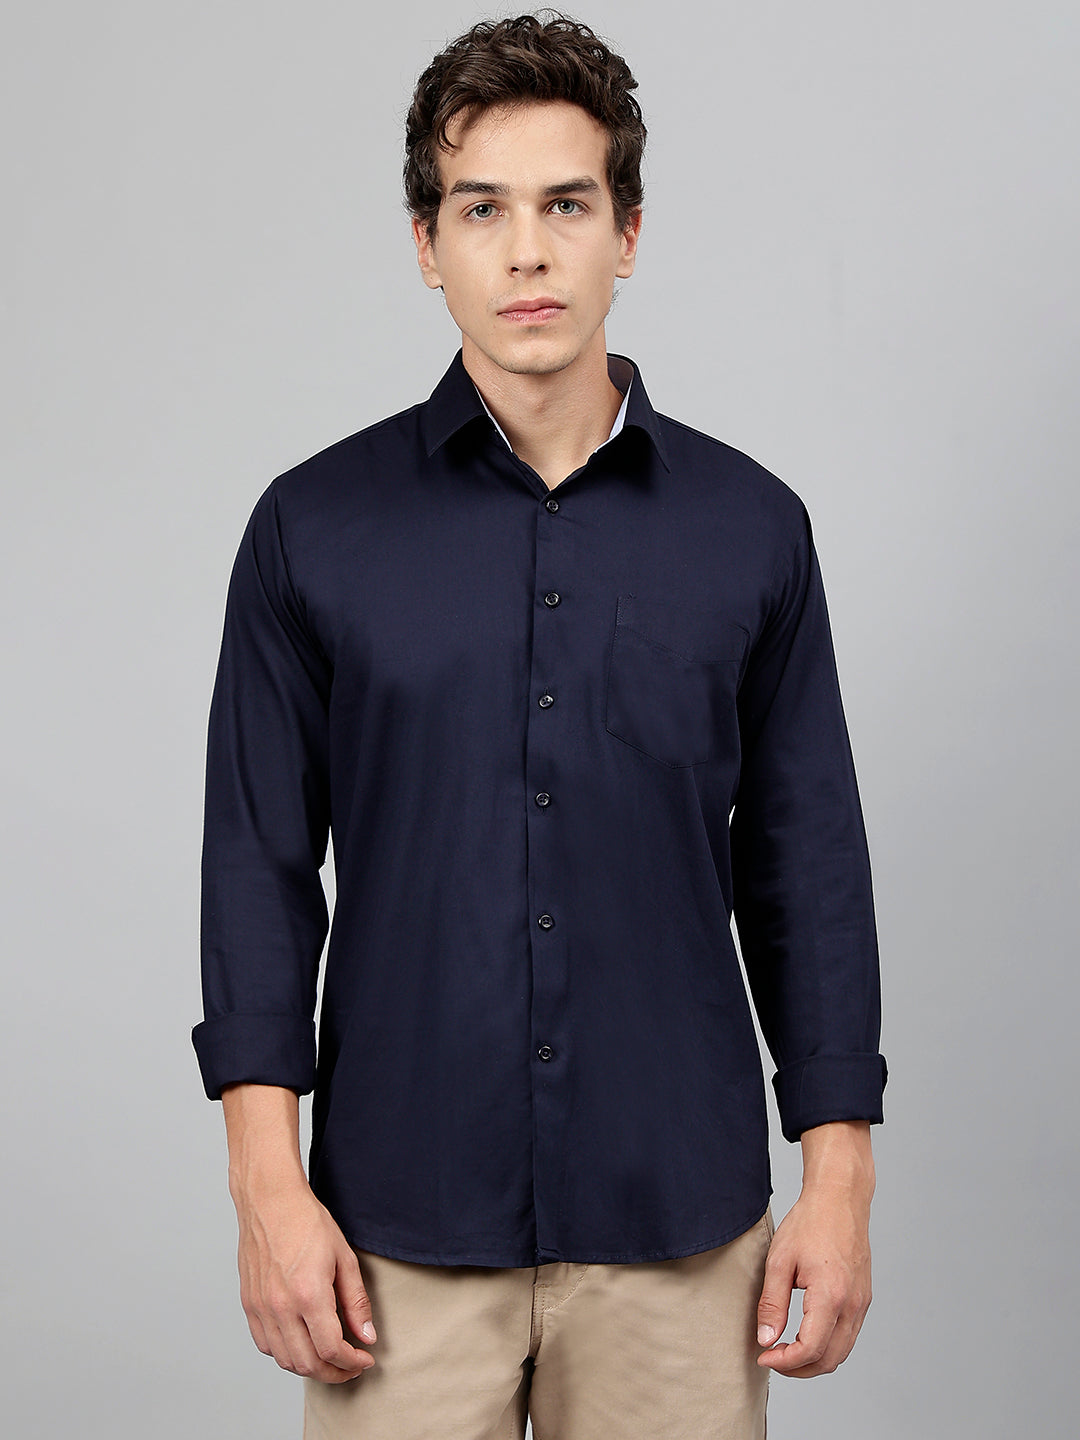 Men Navy Blue Solid Pure Cotton Slim Fit Casual Shirt